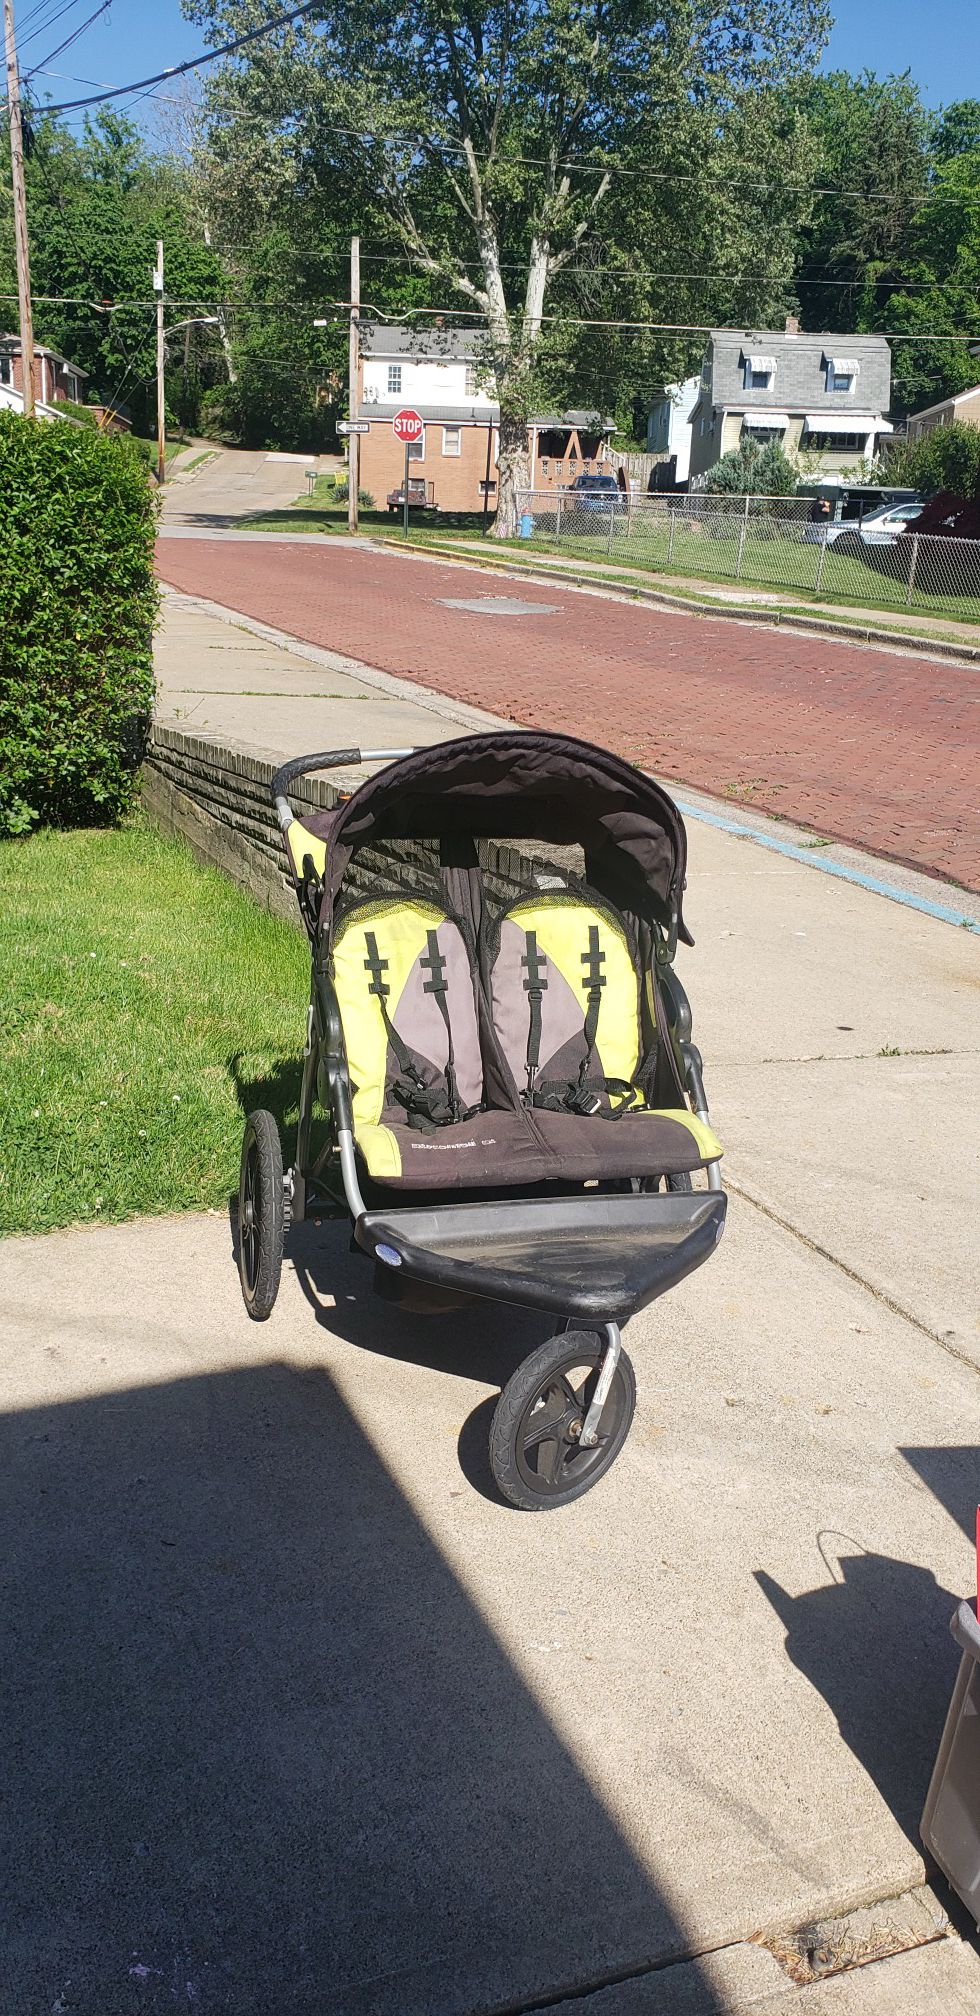 Baby Trend Double stroller